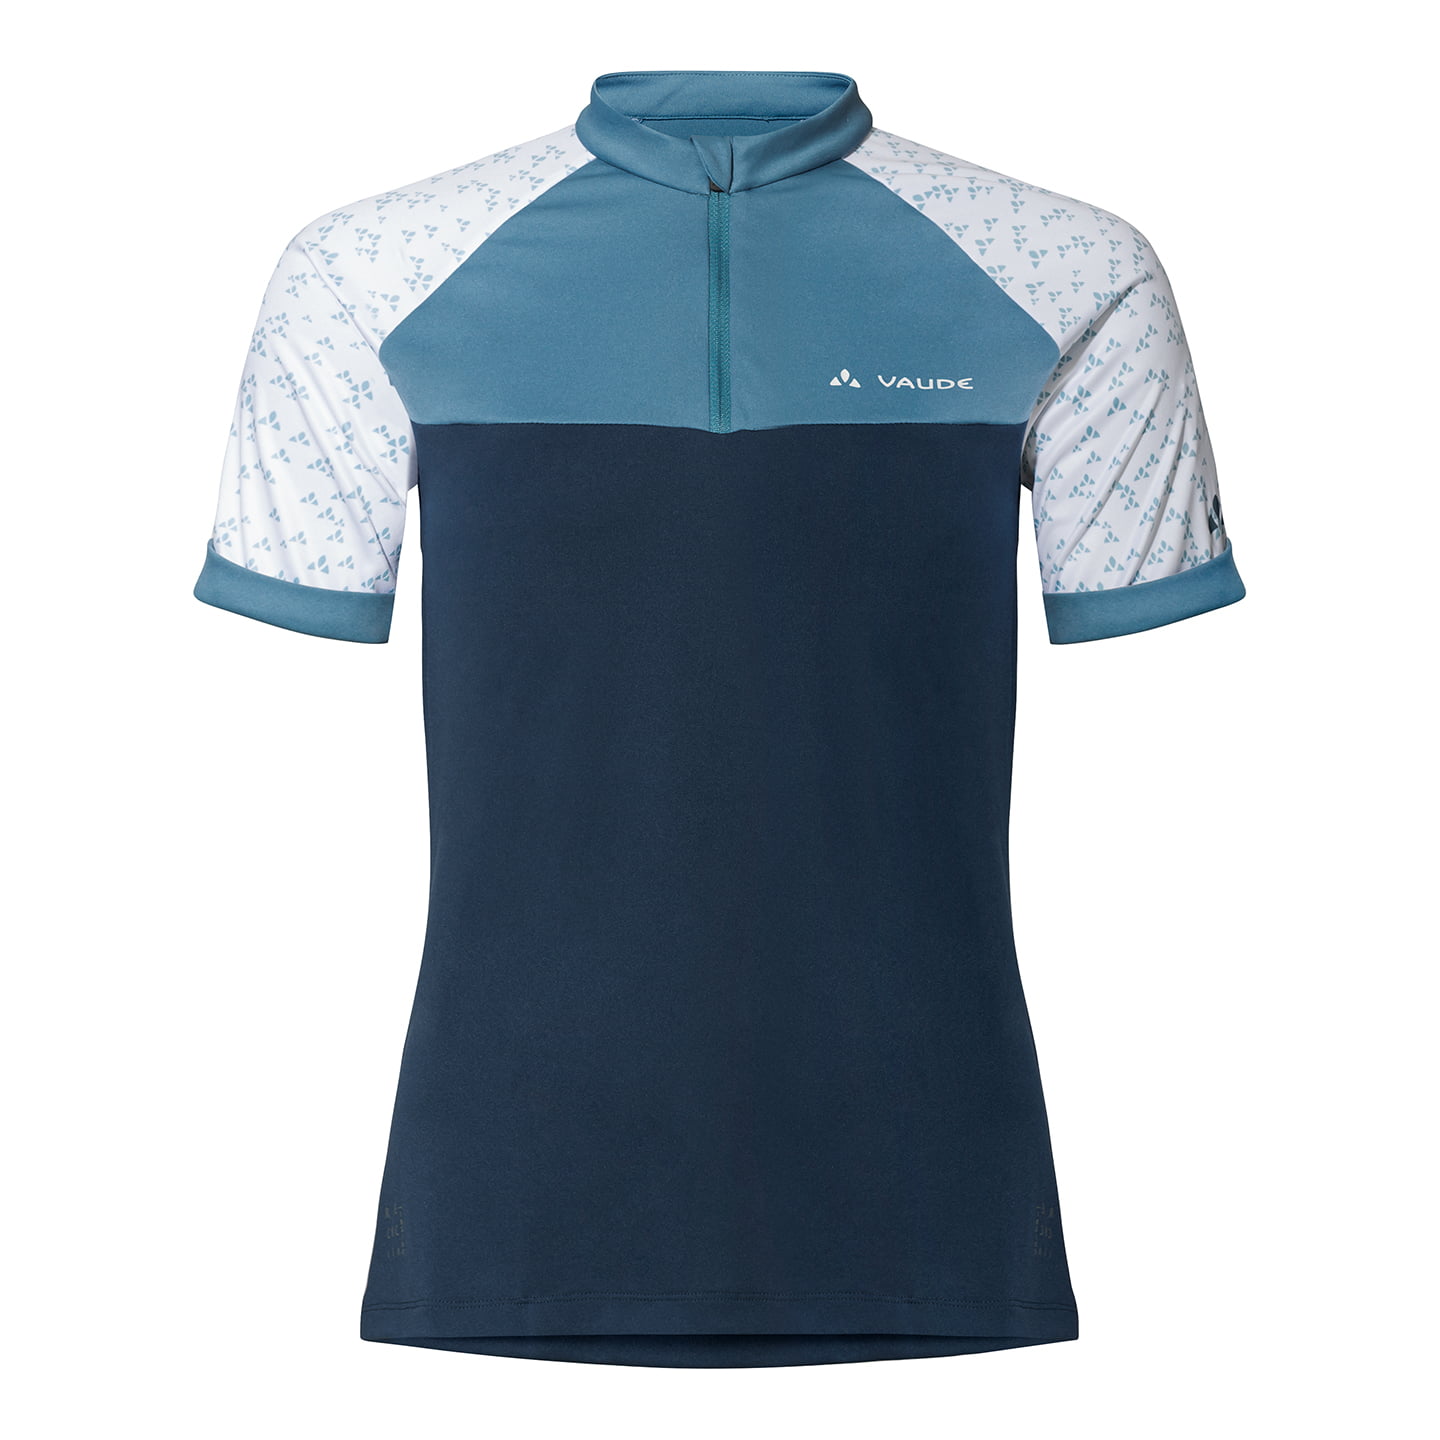 VAUDE Ledro Women’s Bike Shirt Bikeshirt, size 40, Cycle shirt, Bike clothing